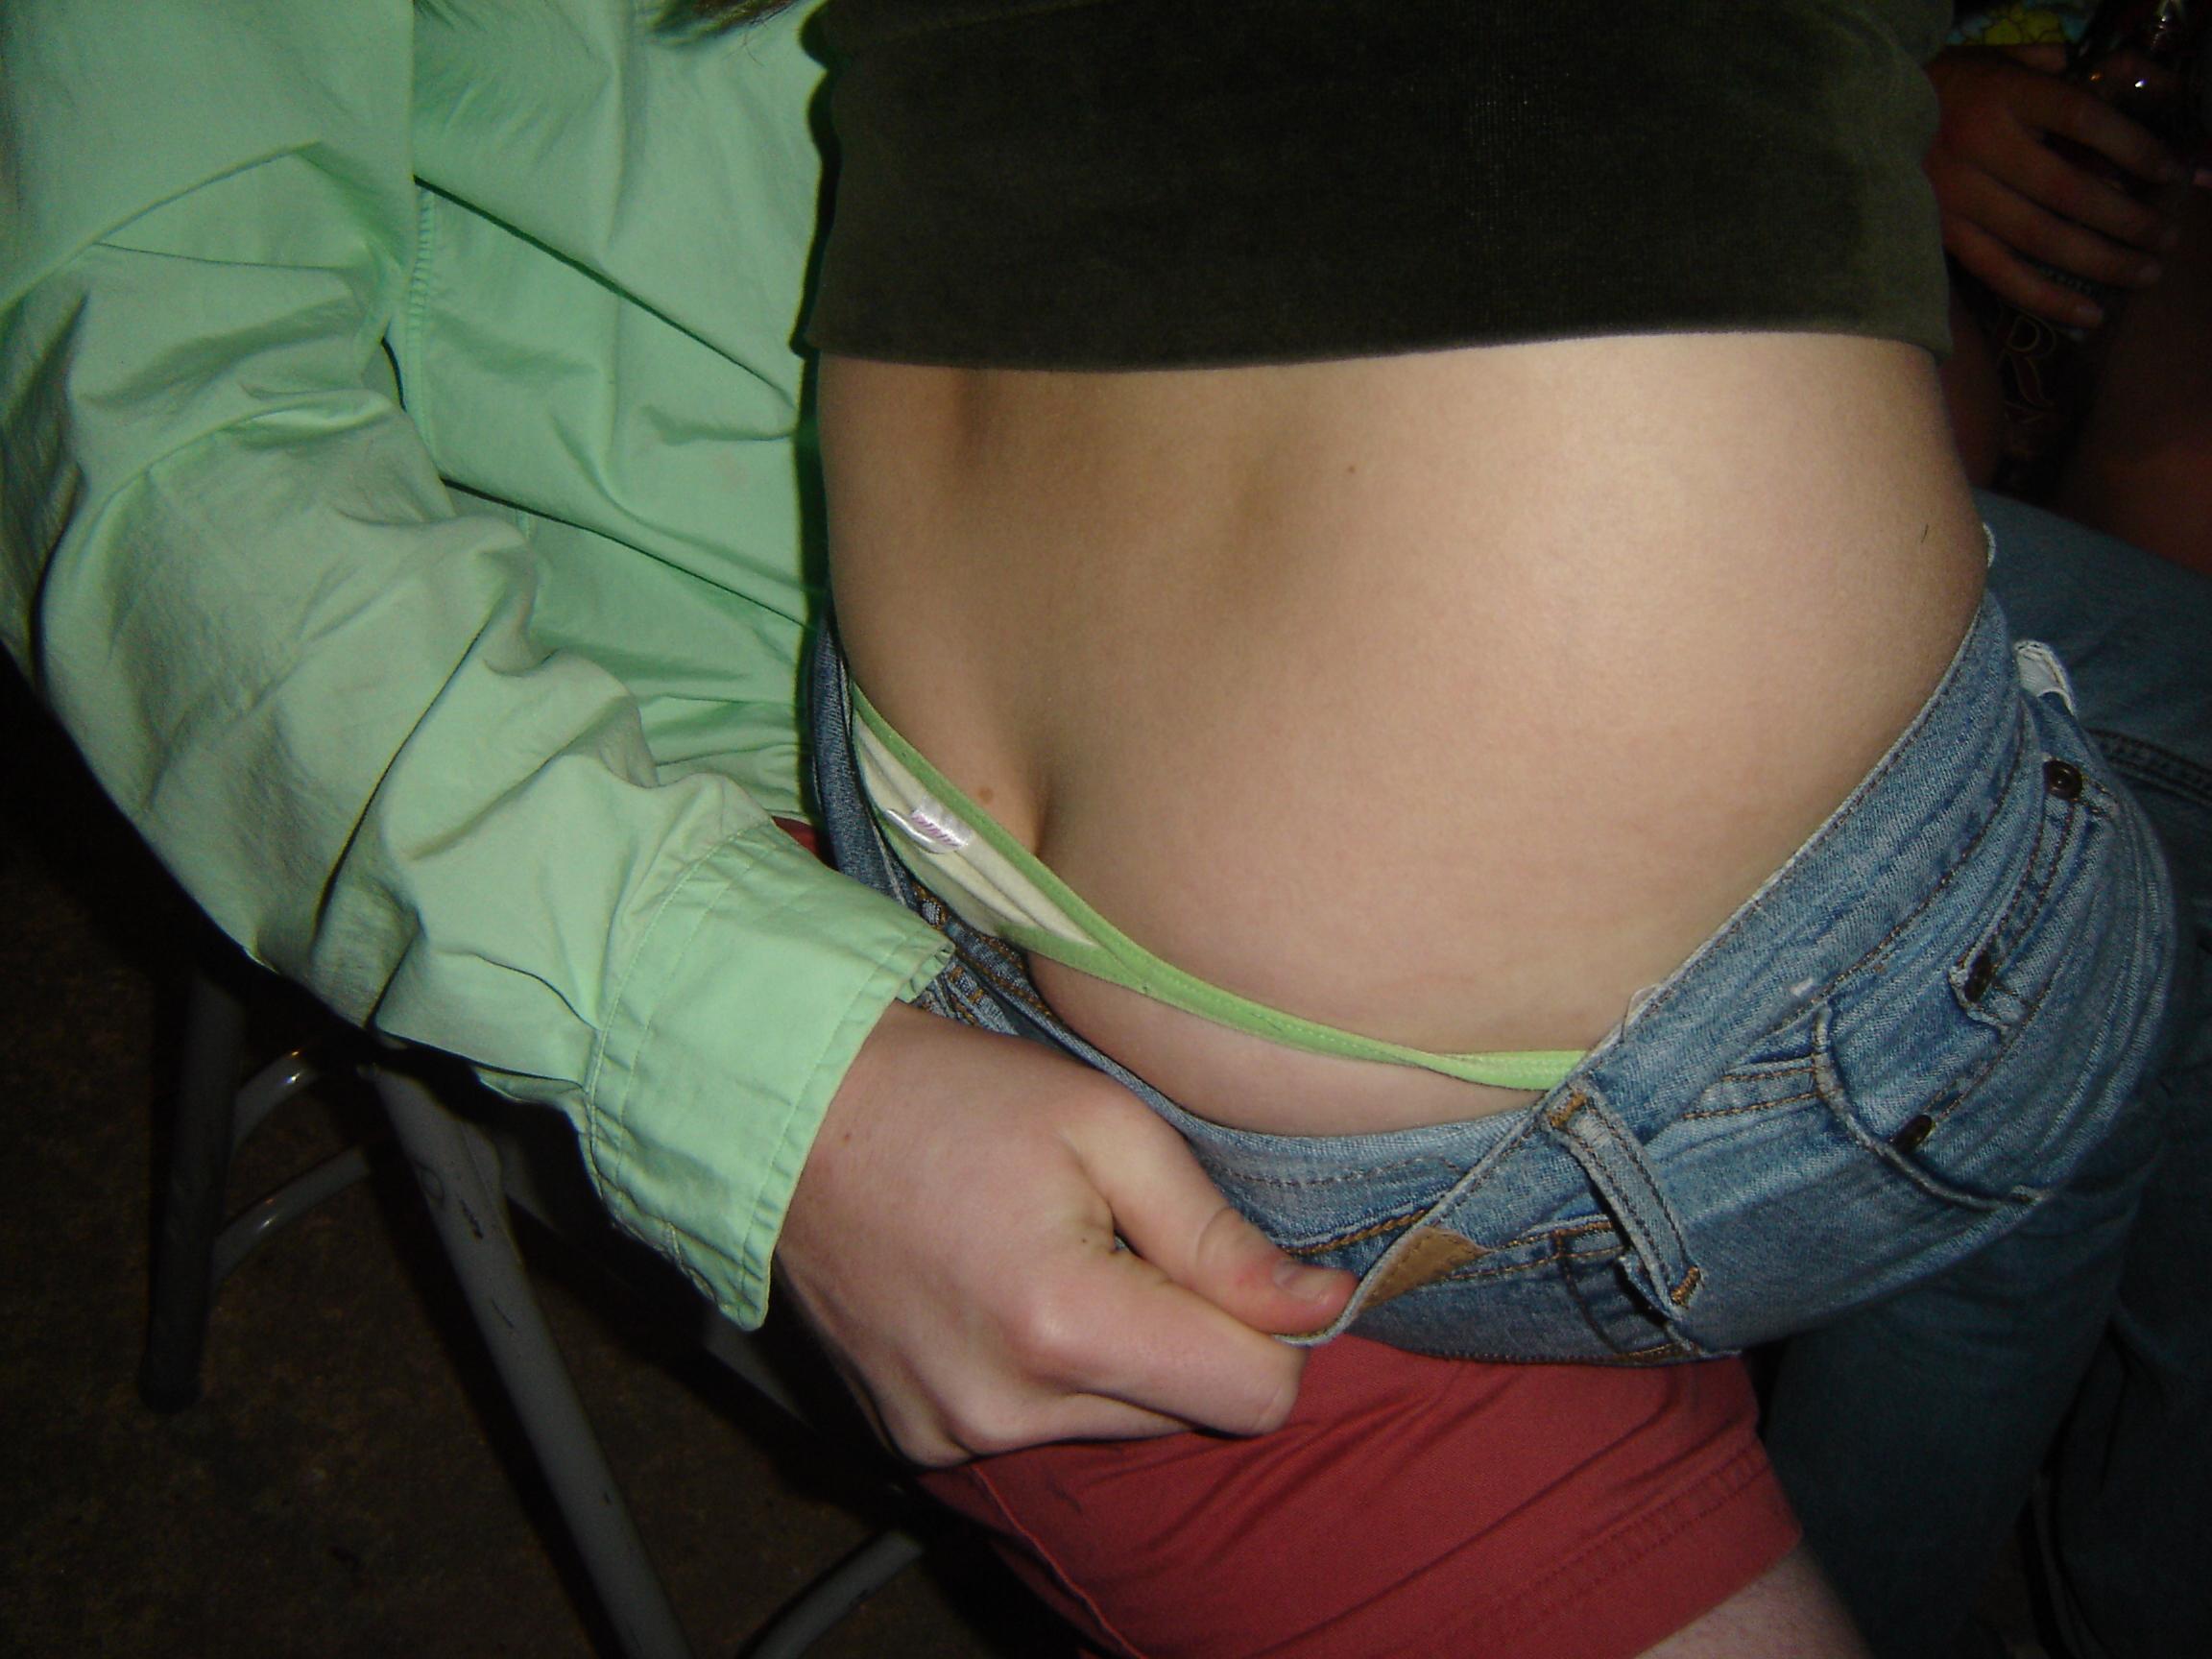 Voyeur cams caught girls-next-door showing off their thongs foto Immagine foto